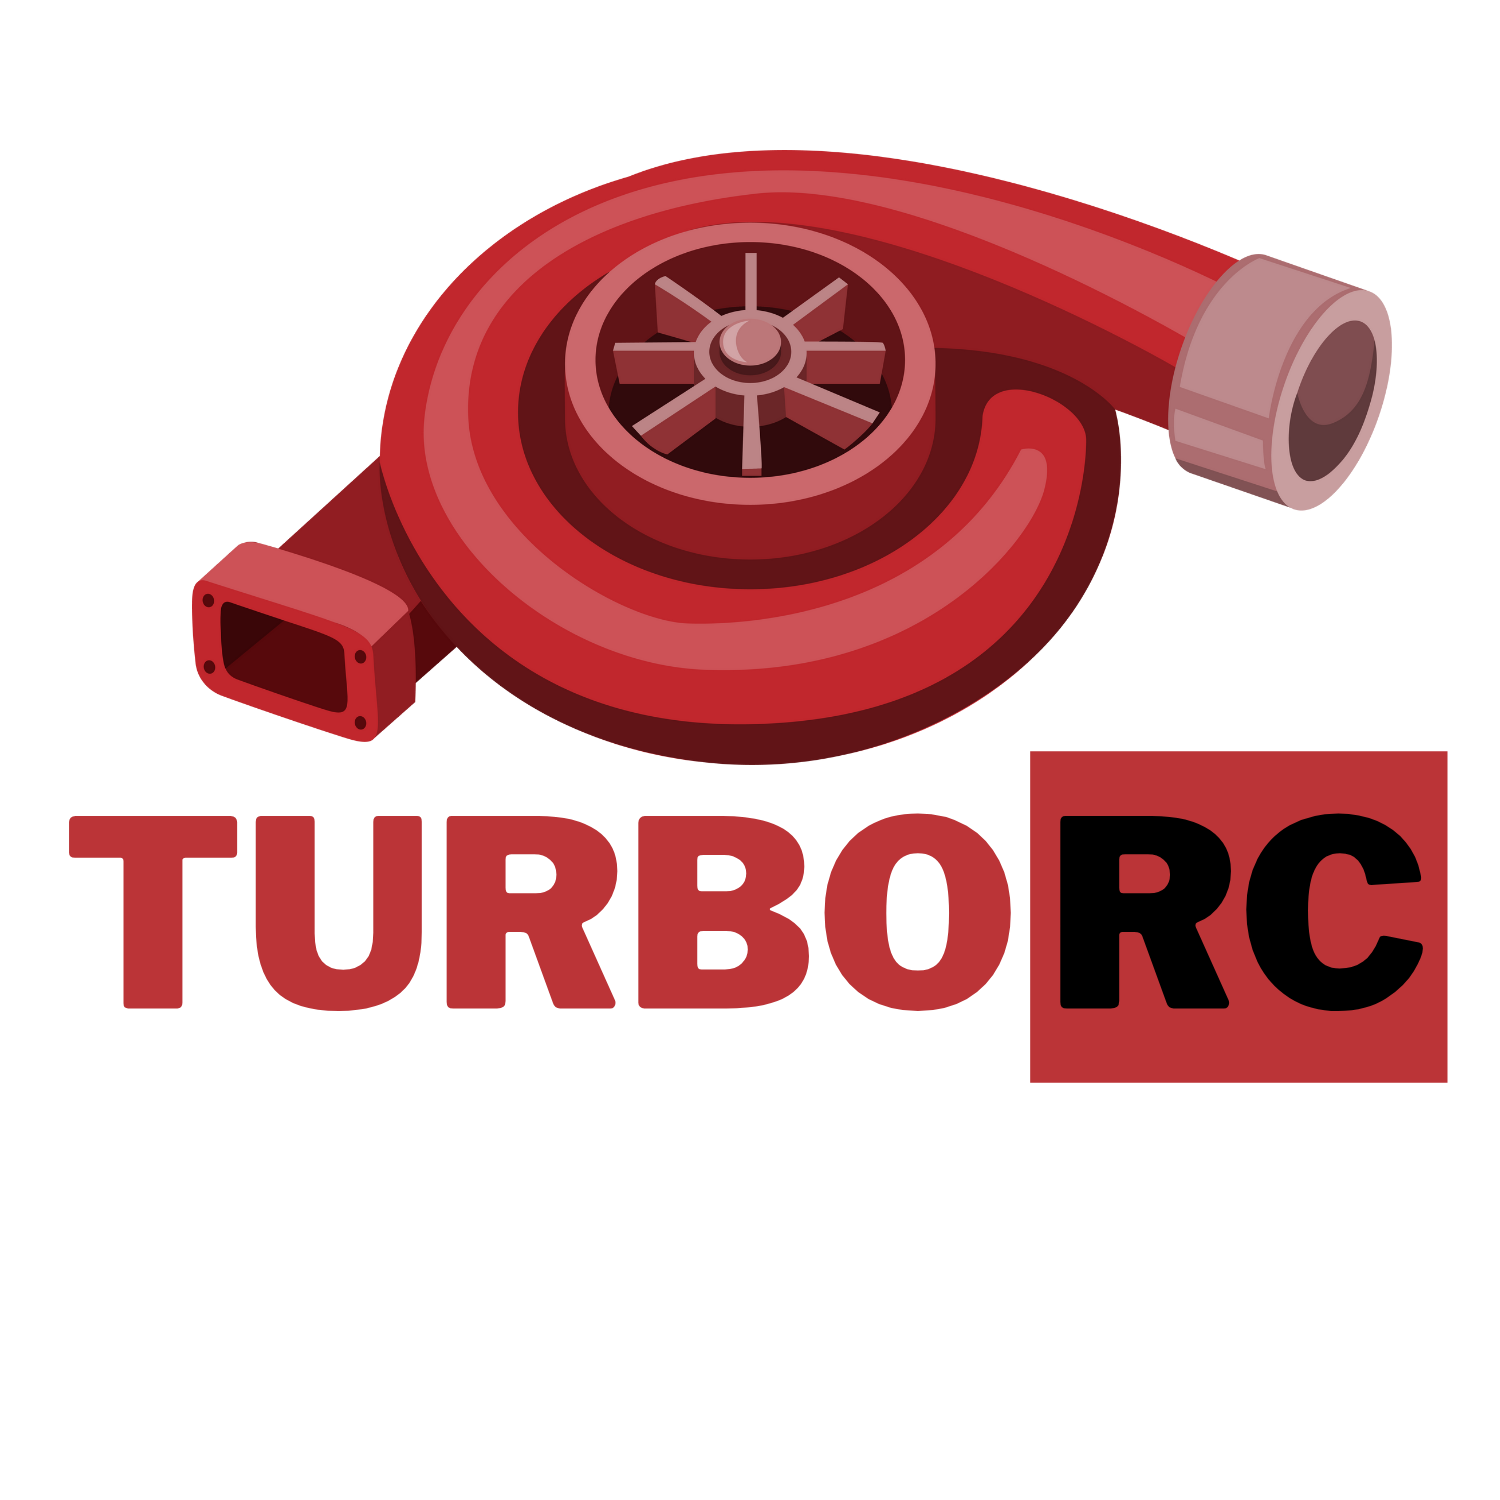 Turbo RC